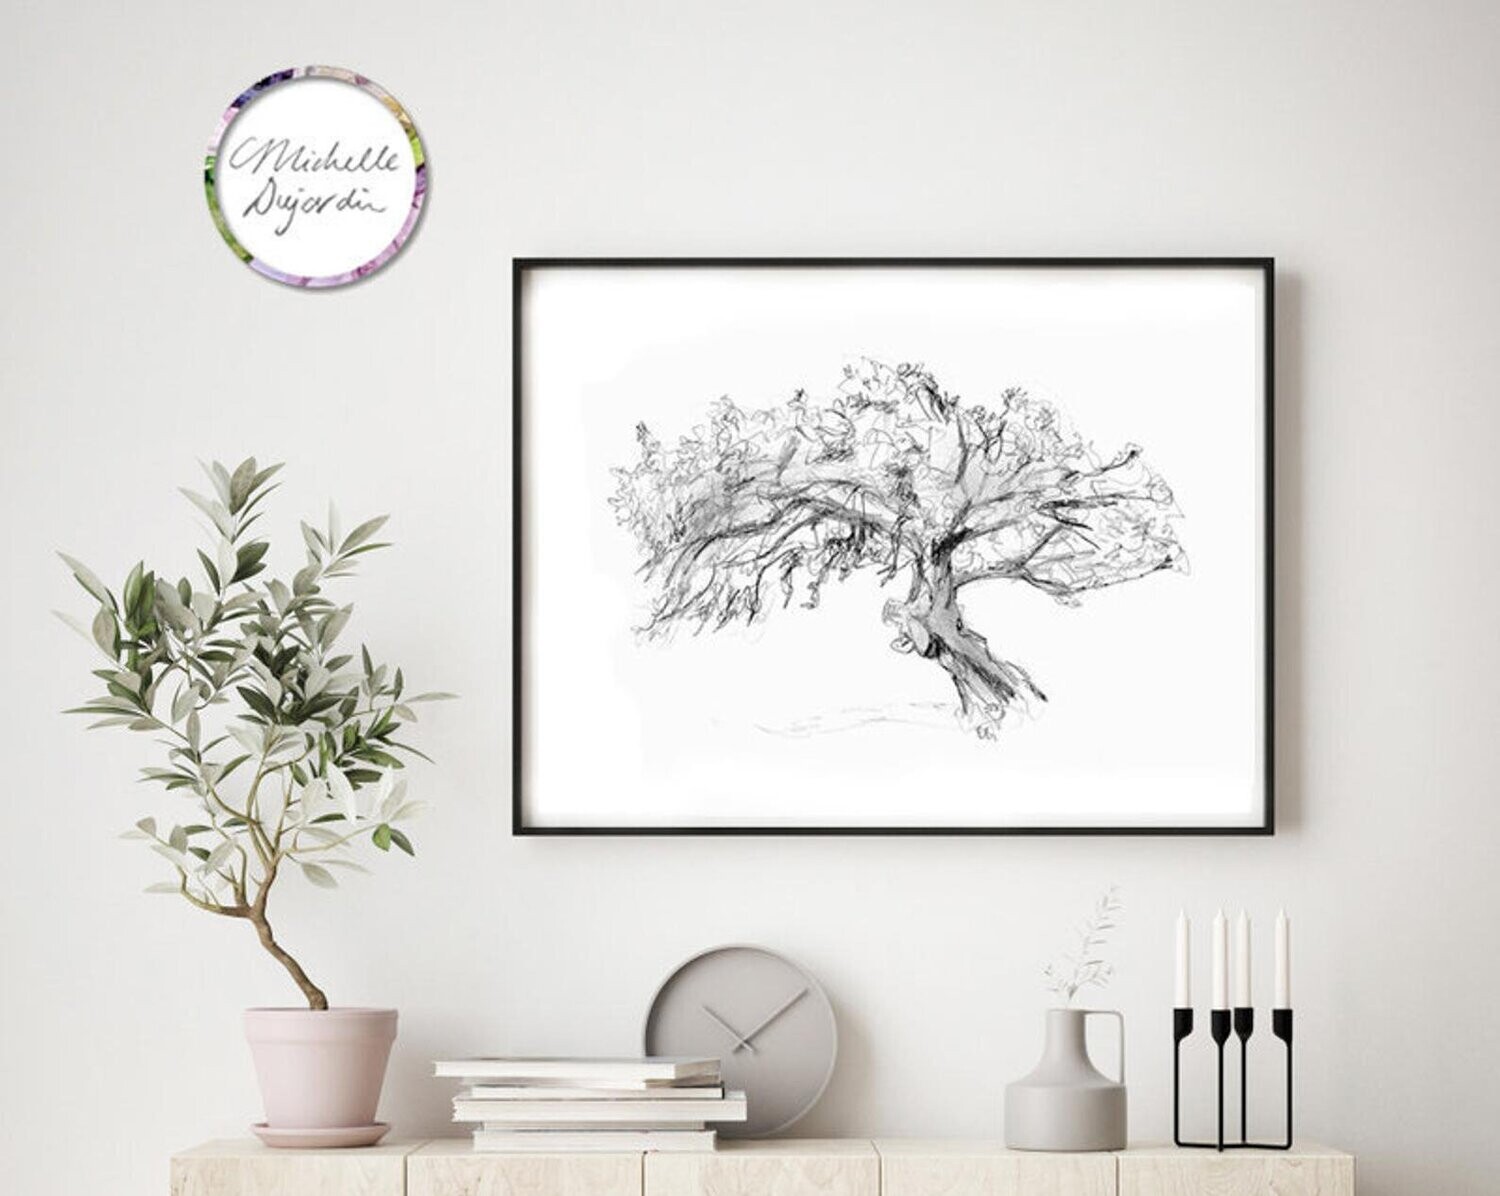 Fine art print of a cork oak tree drawing